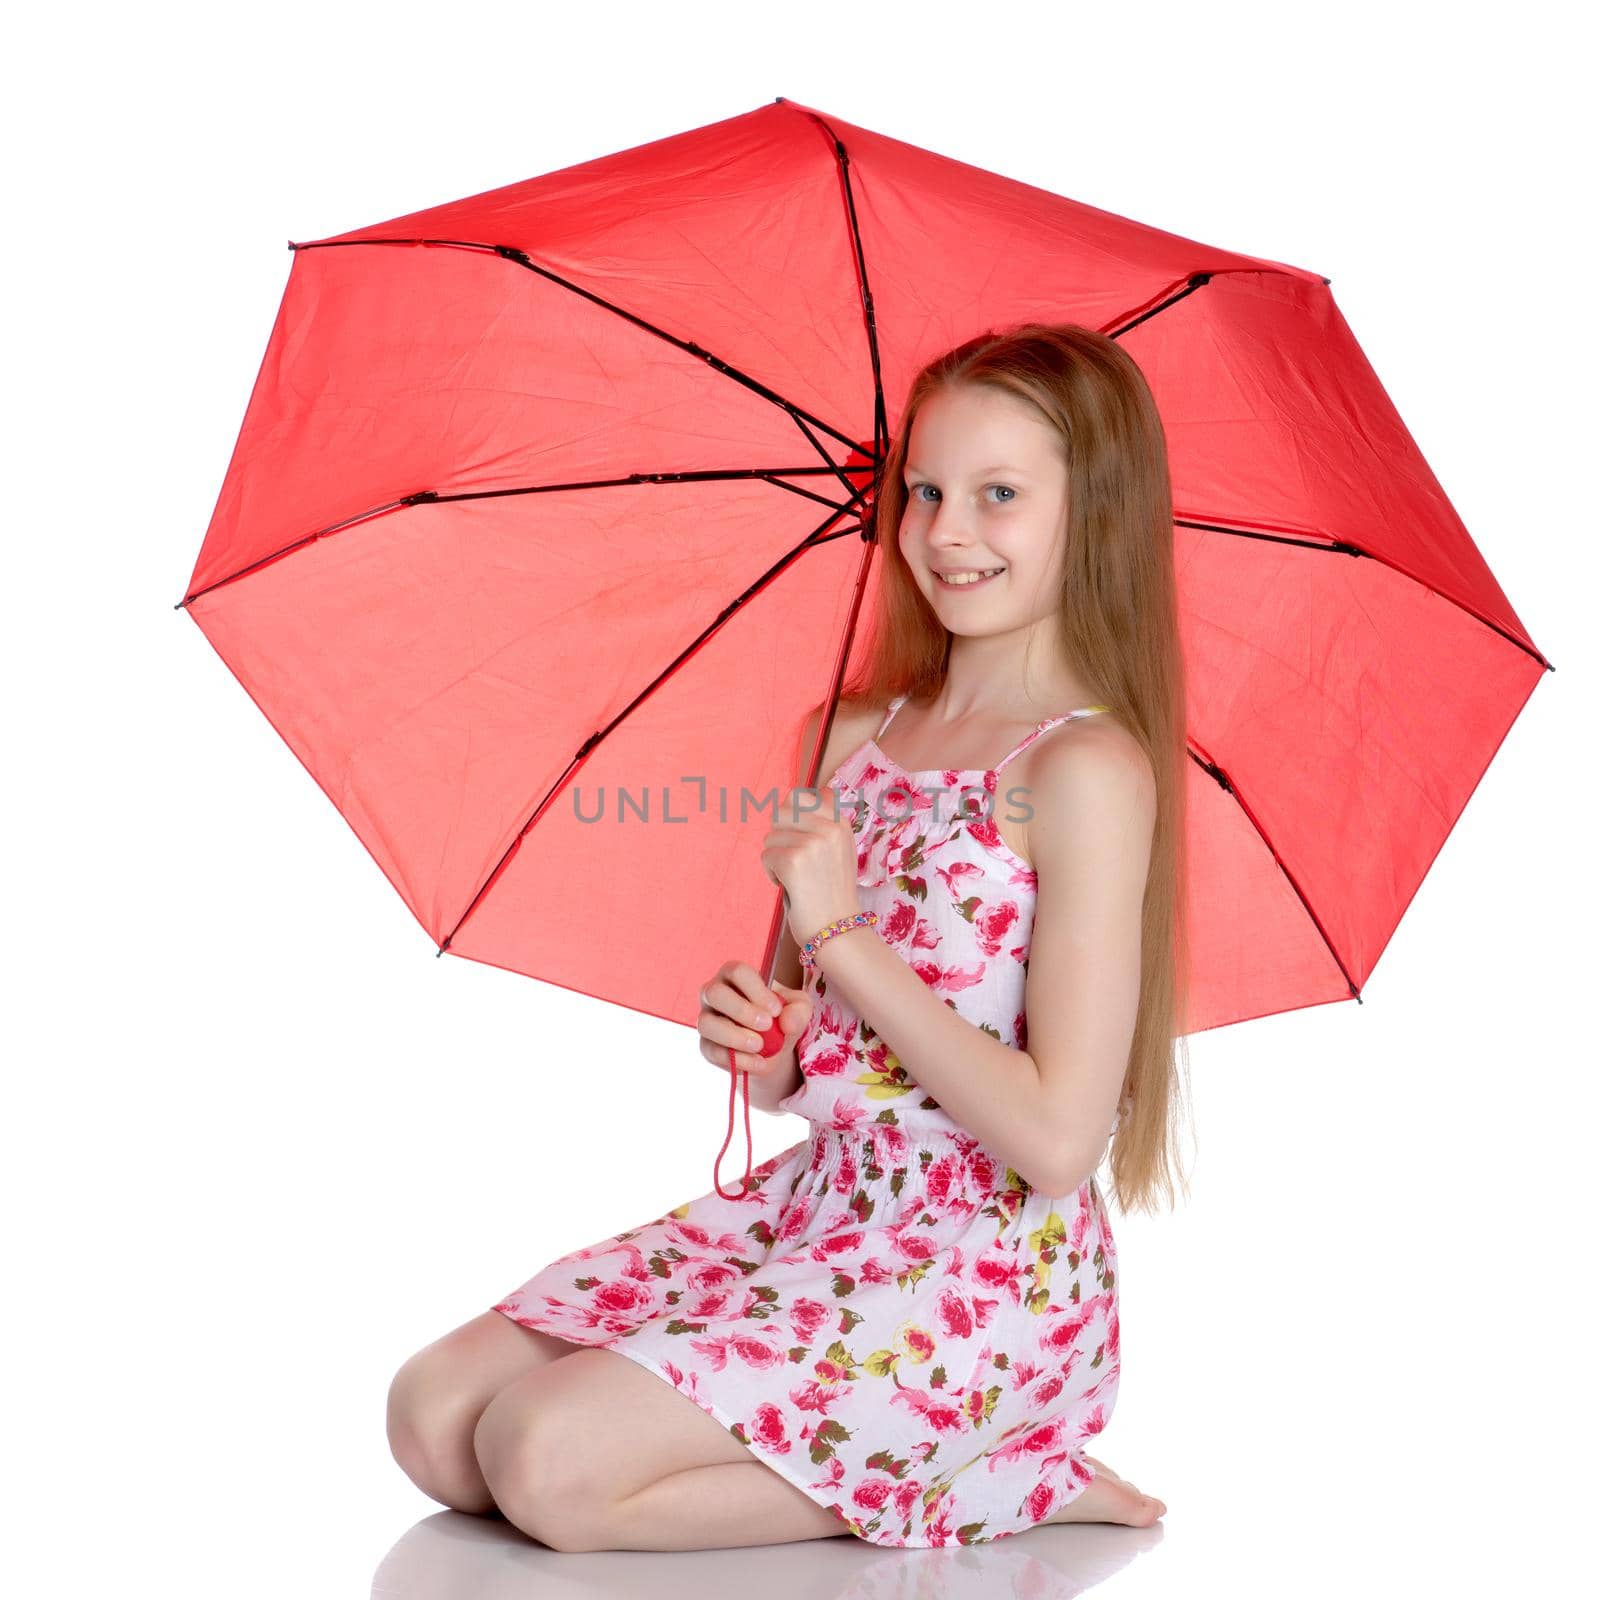 Little girl with umbrella. by kolesnikov_studio